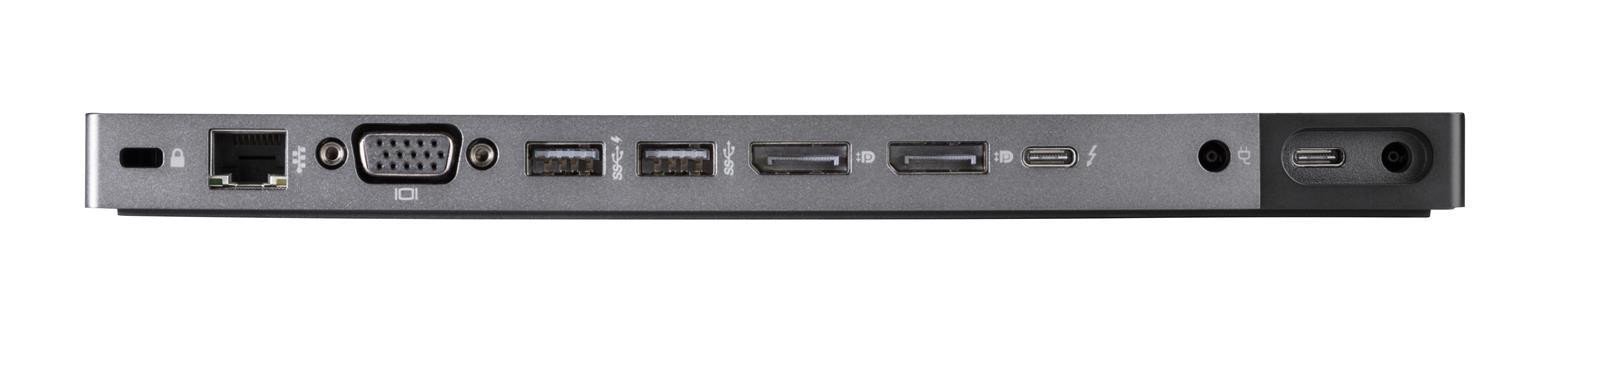 HP HSTNN-CX01 Thunderbolt 3 Dock | ohne Netzteil | ohne Kabel